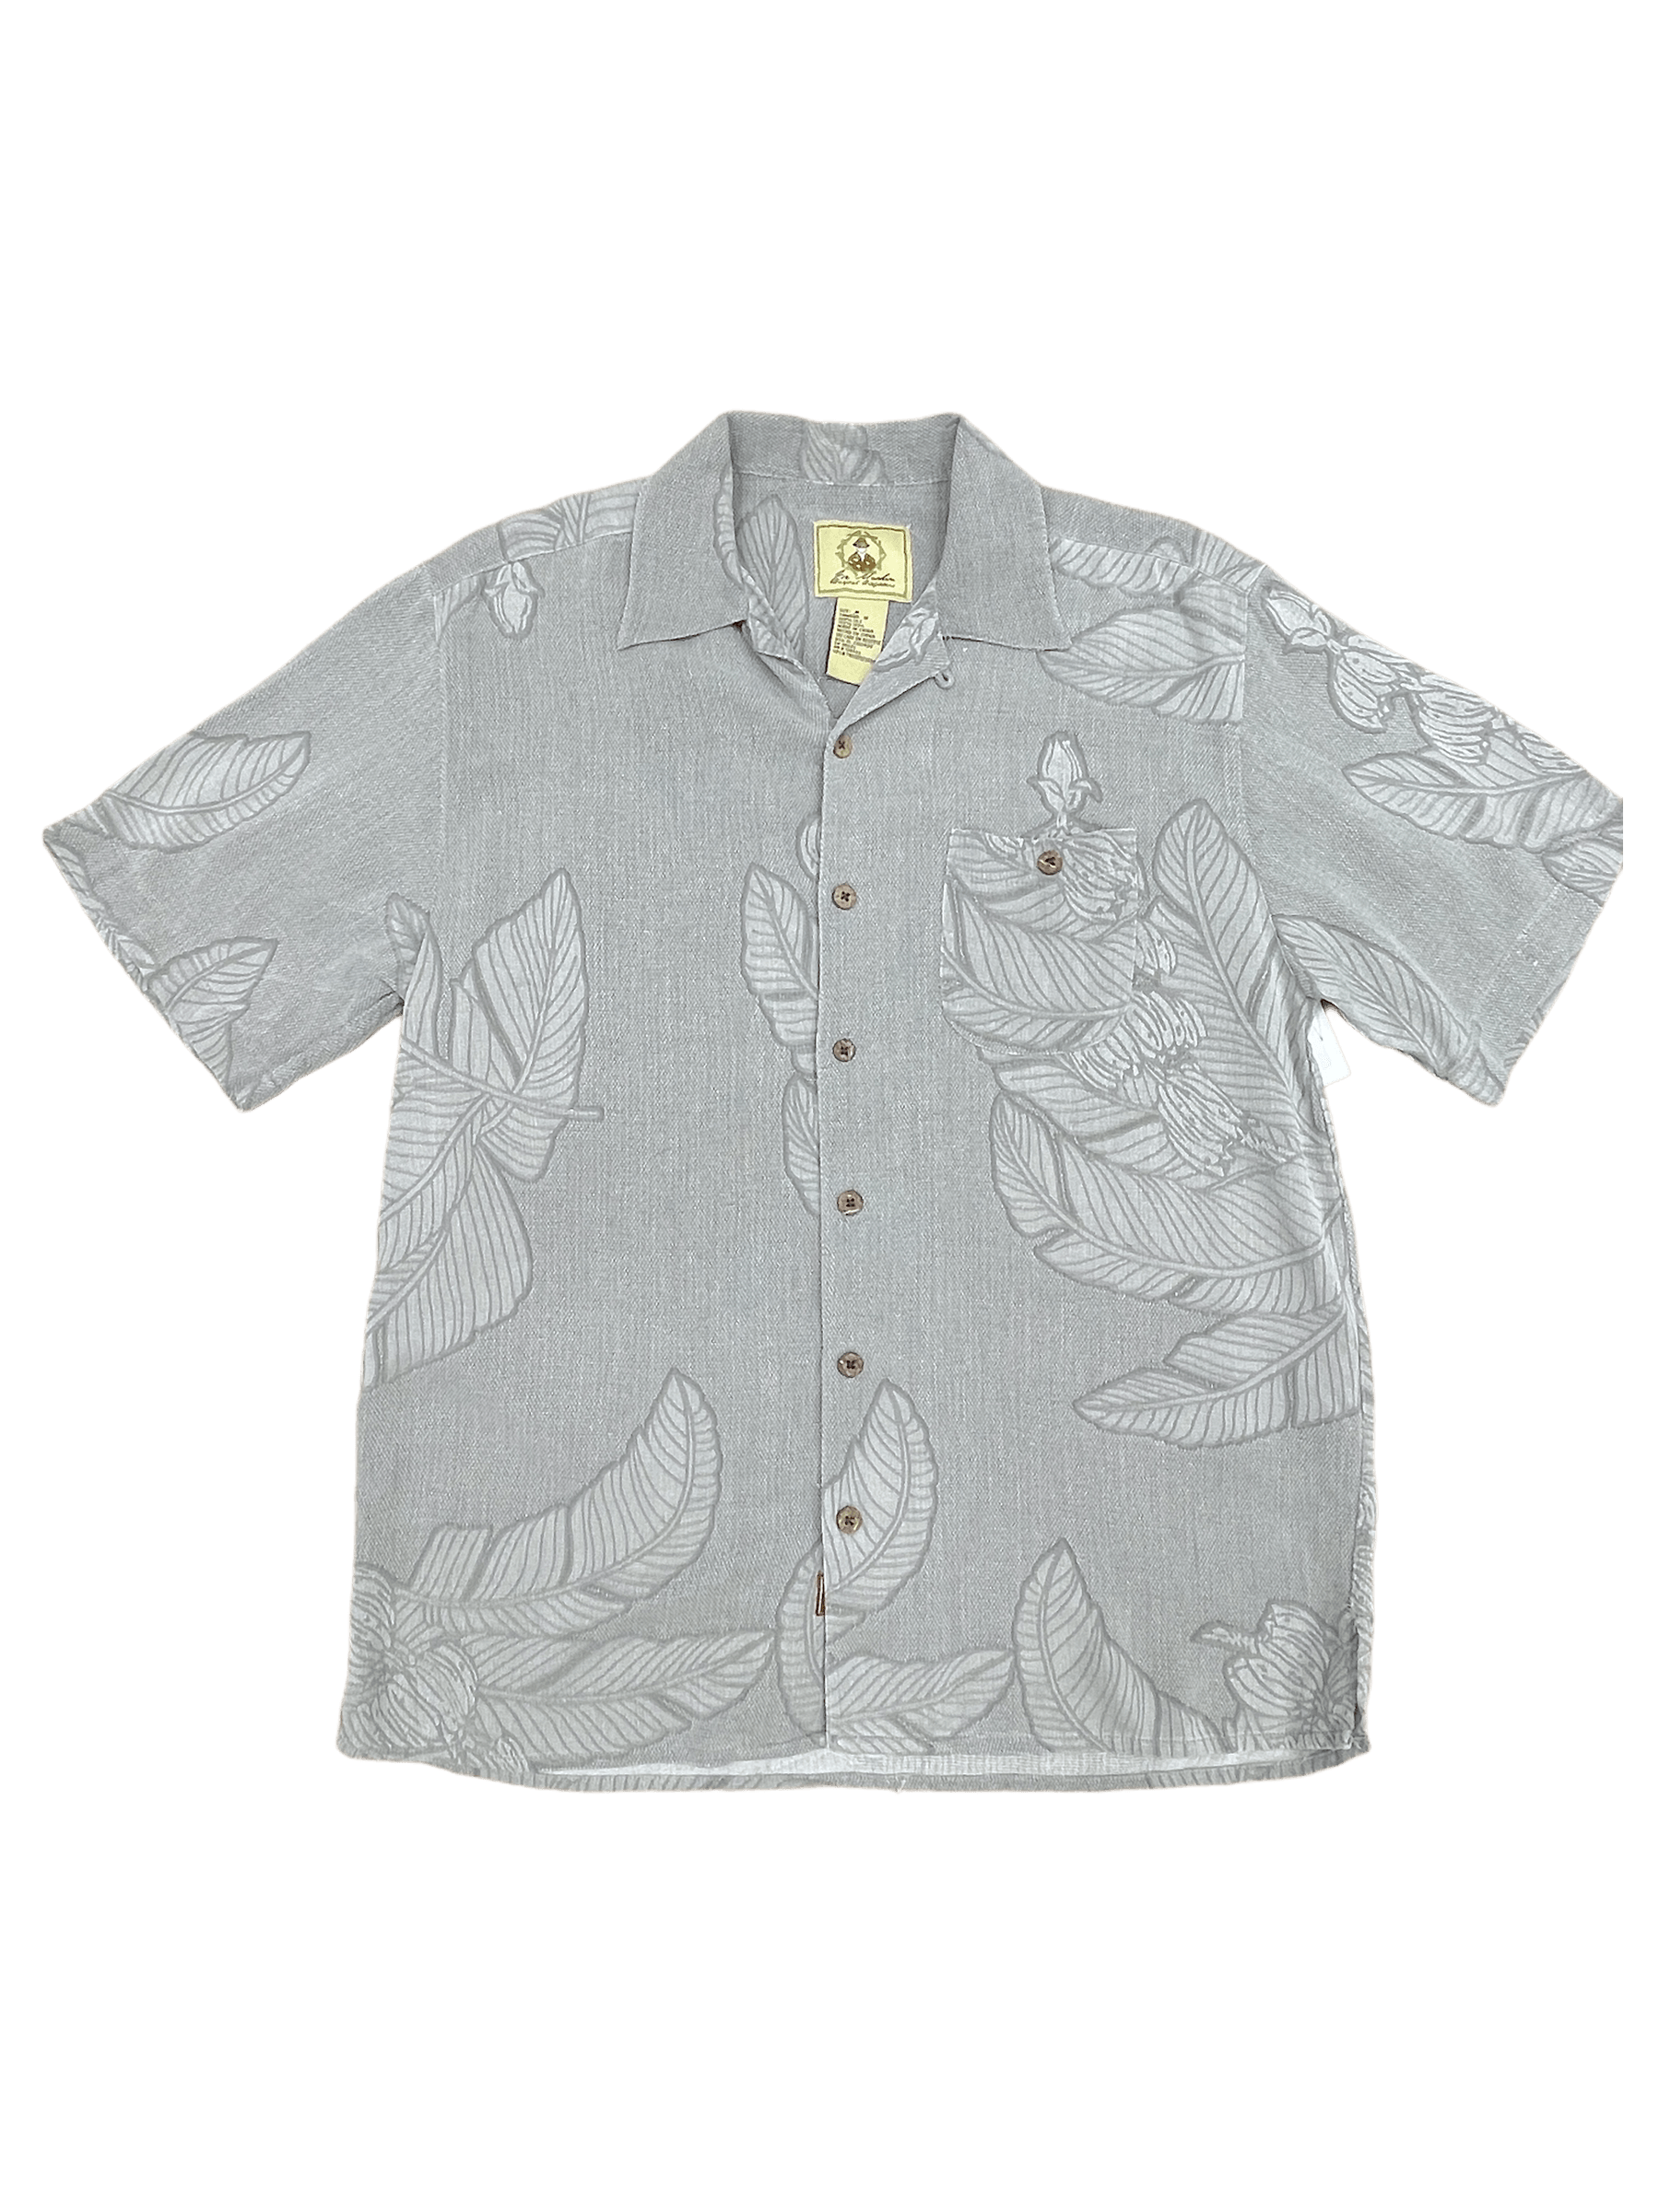 Silk Grey Floral Button Up Short Sleeve Shirt Medium - Genuine Design luxury consignment